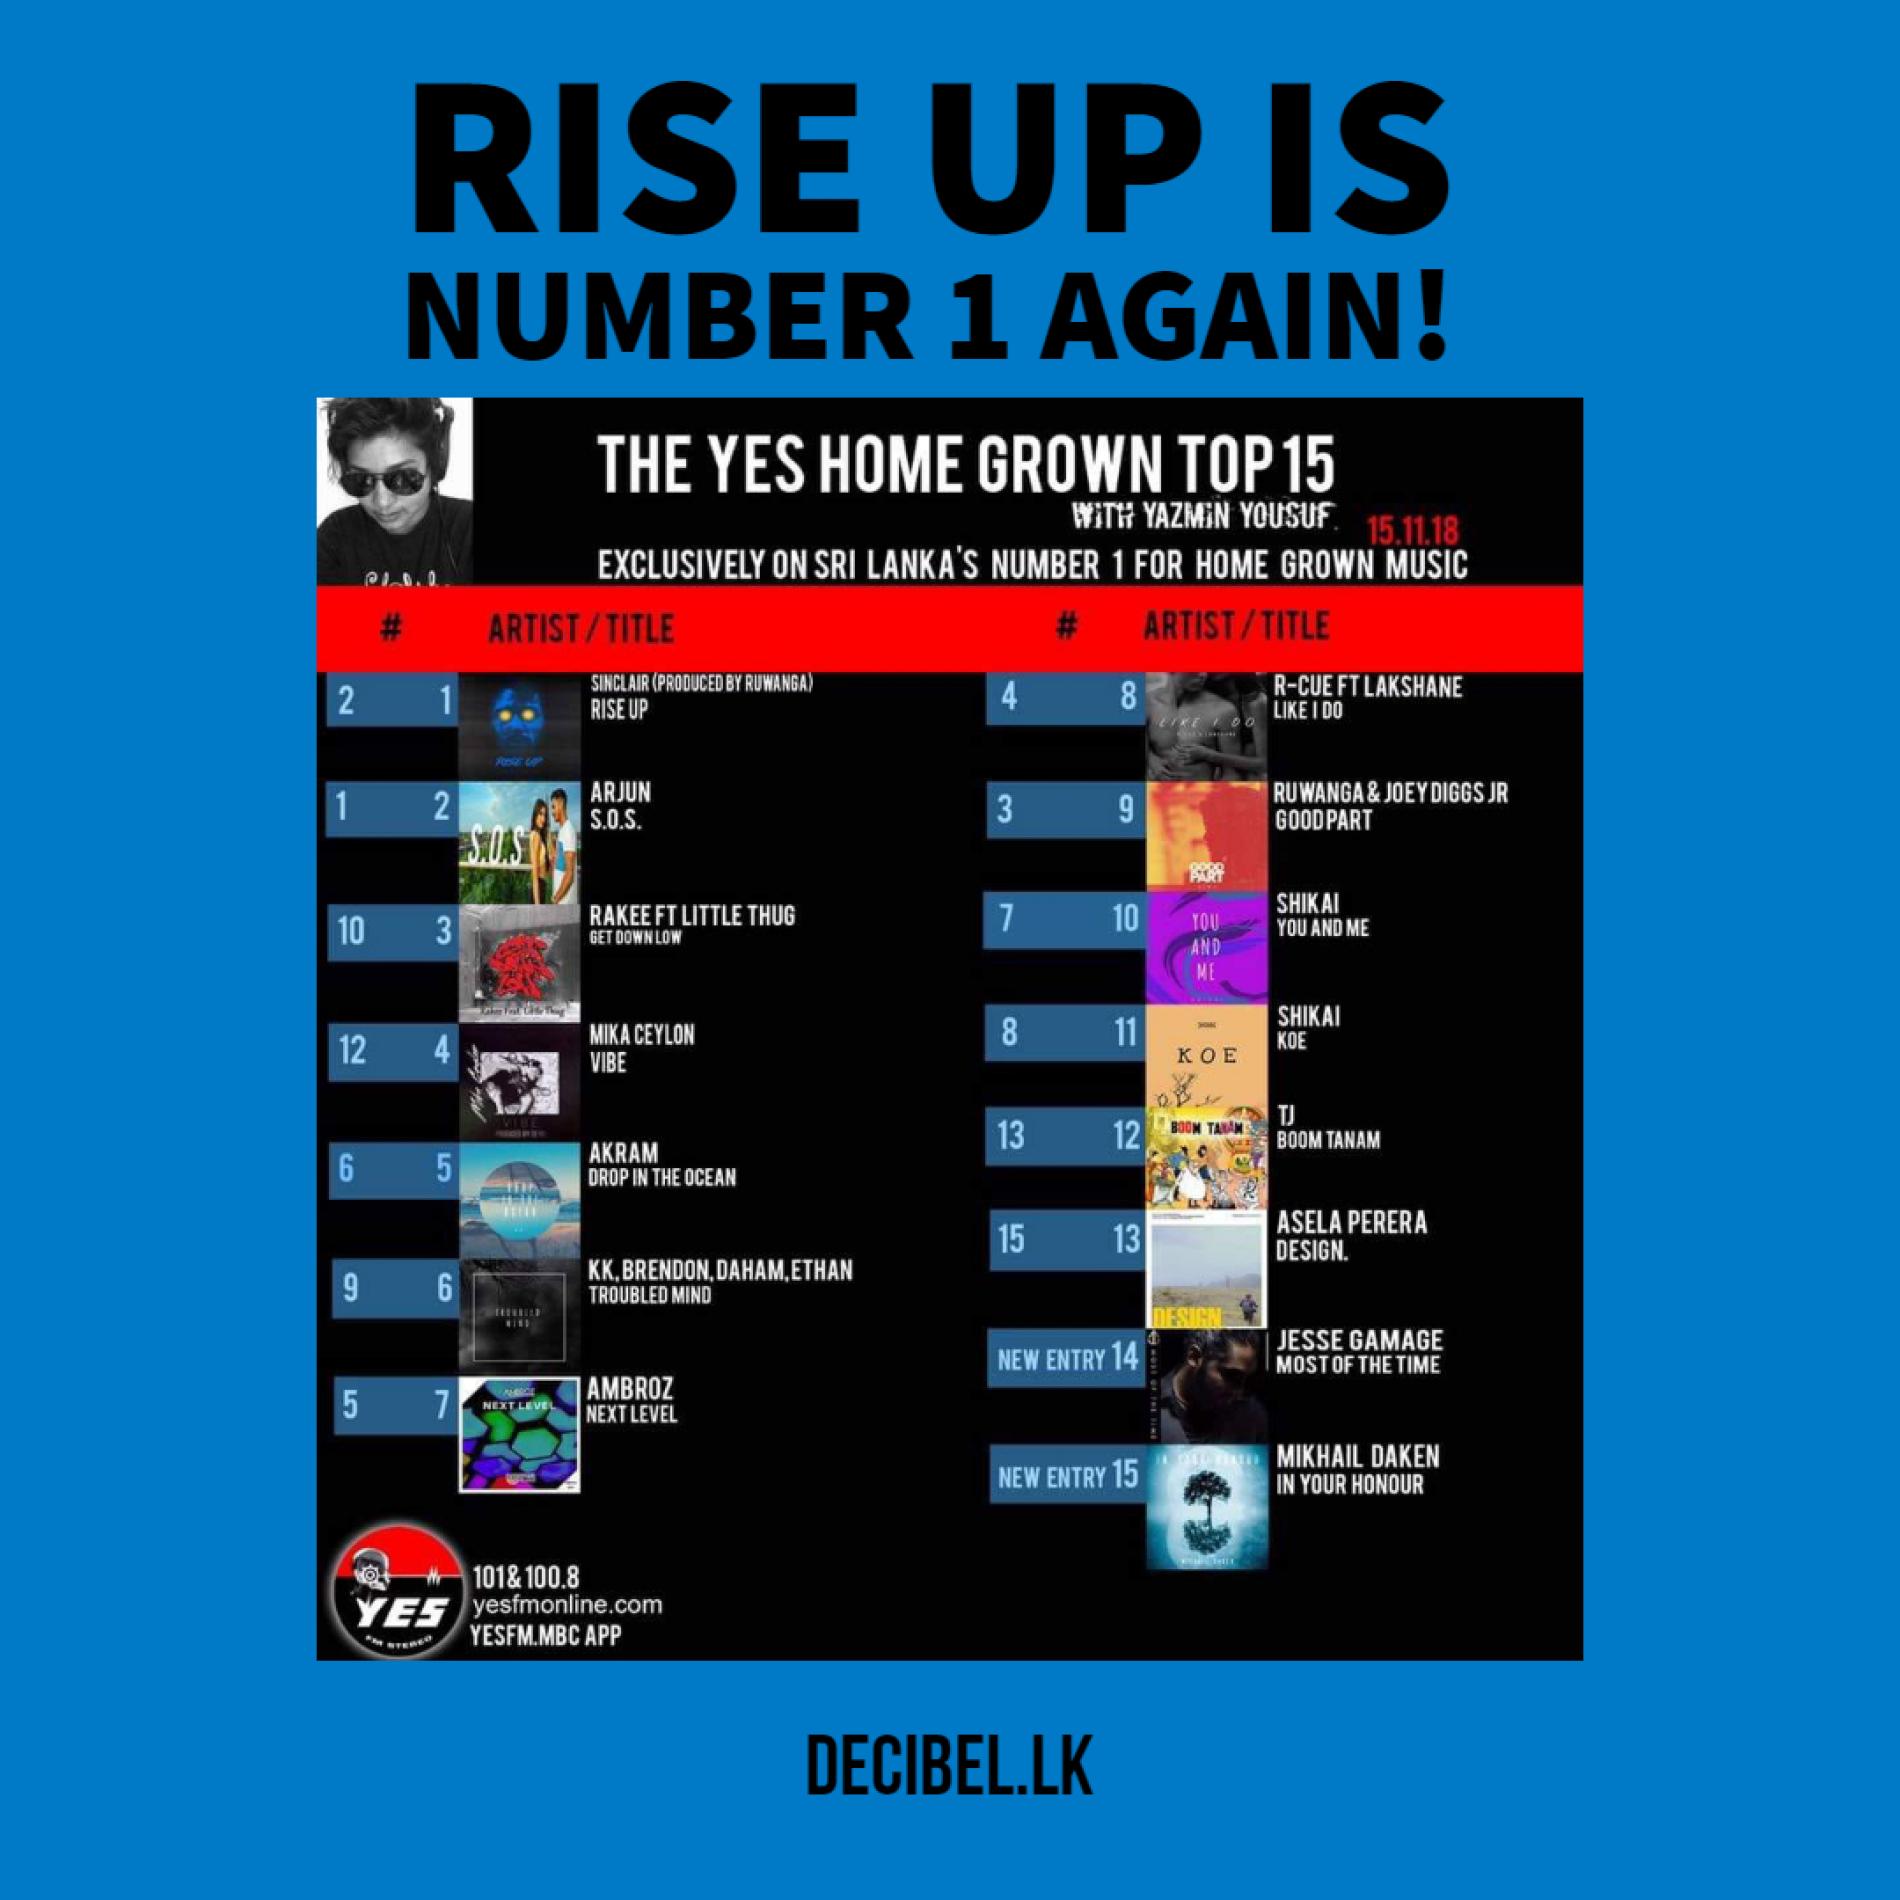 ‘Rise Up’ #1 Again!